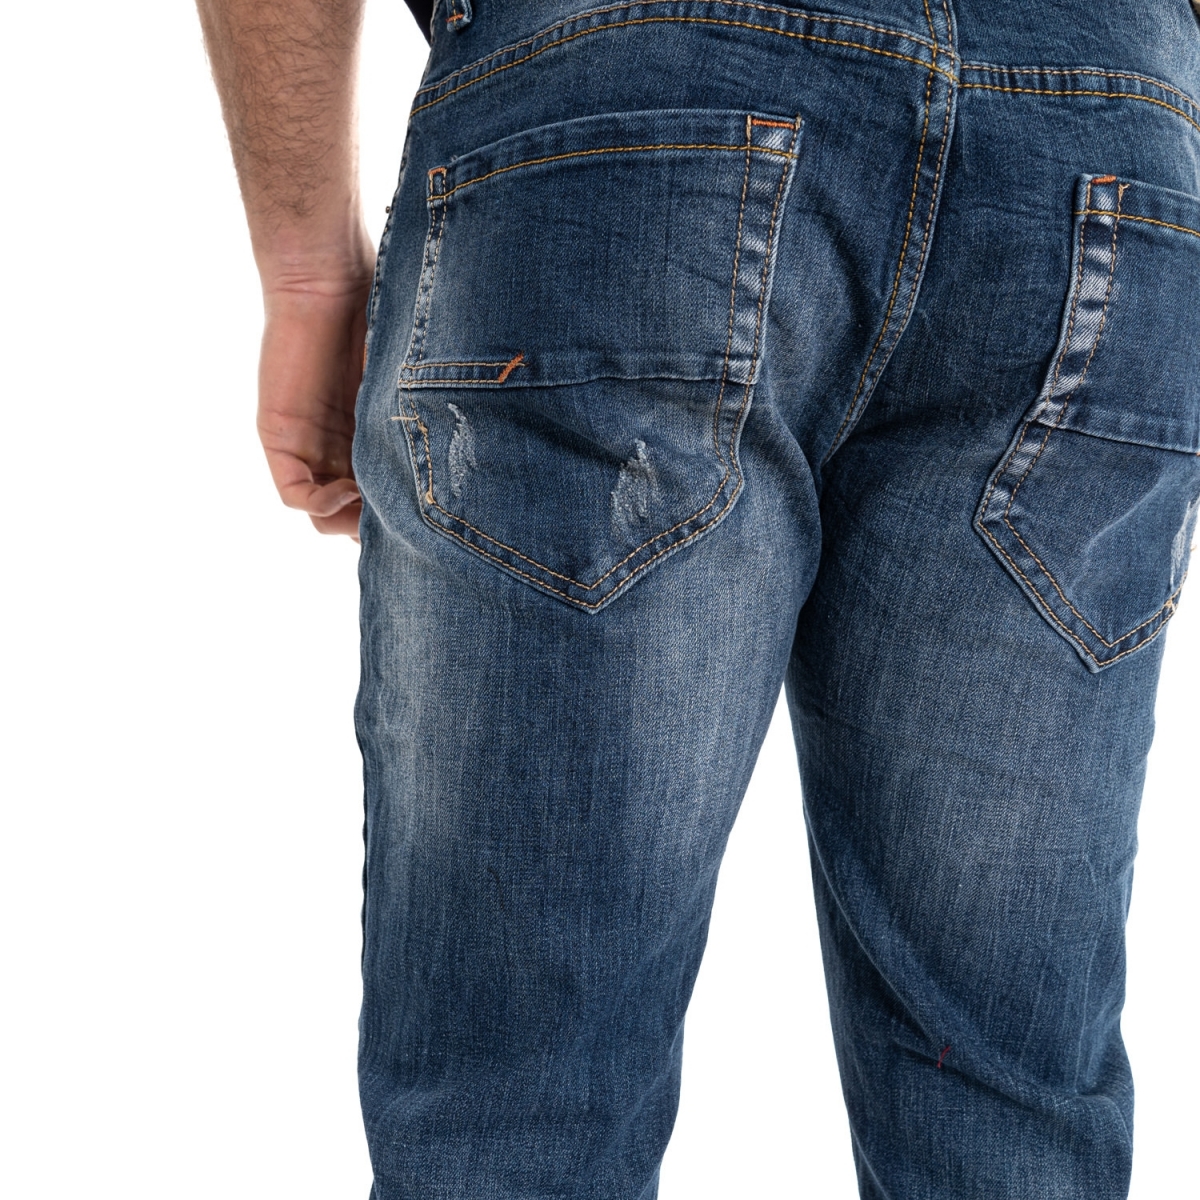 clothing Denim men Jeans LPHM1075 LANDEK PARK Cafedelmar Shop